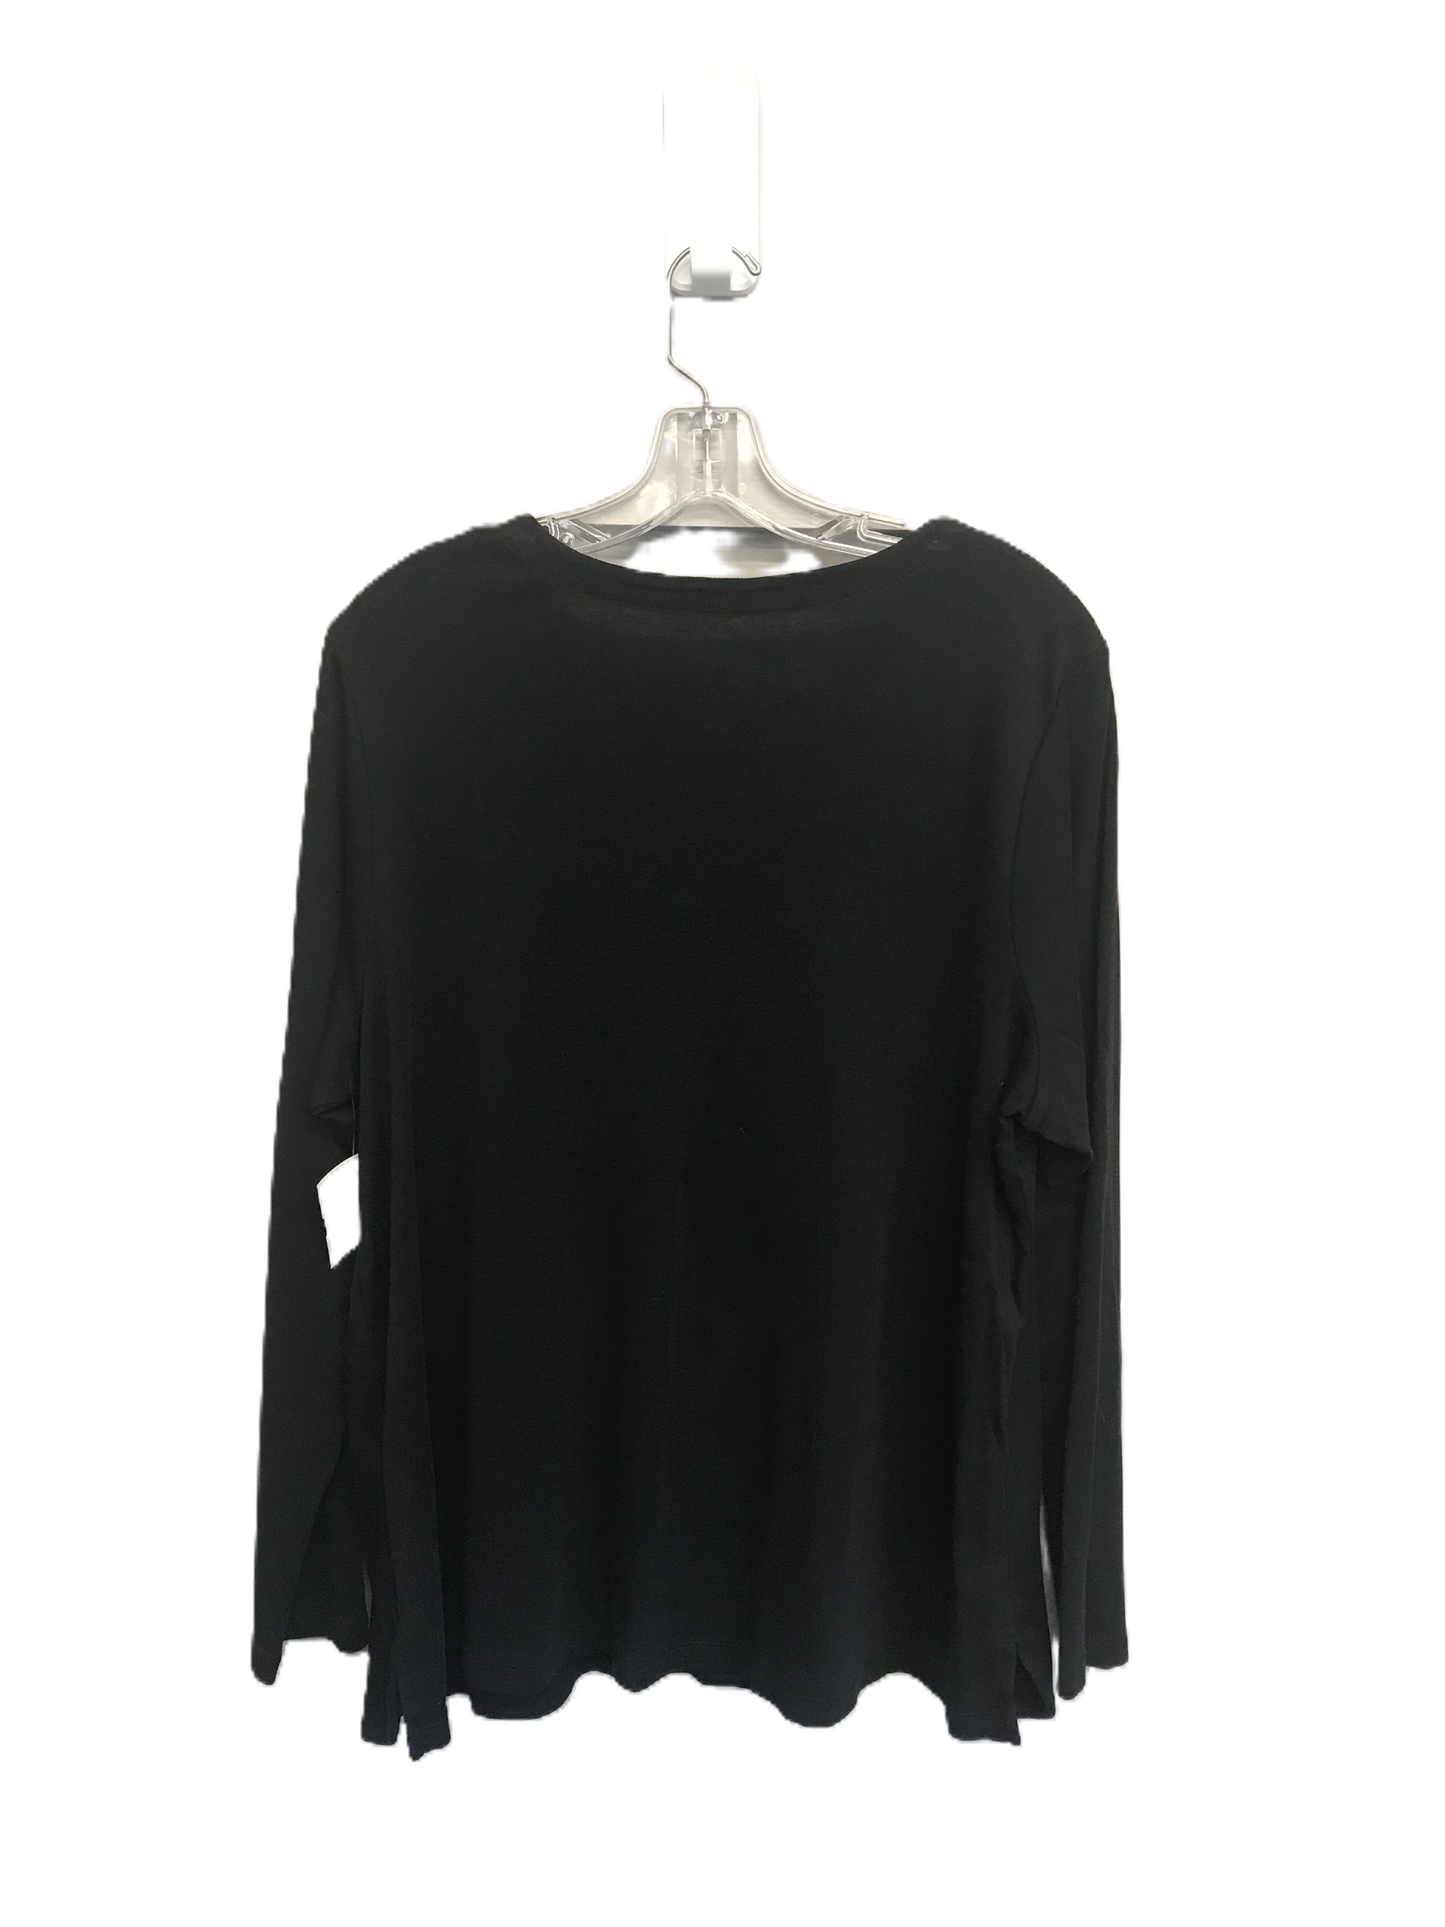 Black Top Long Sleeve Basic By J. Jill, Size: 2x